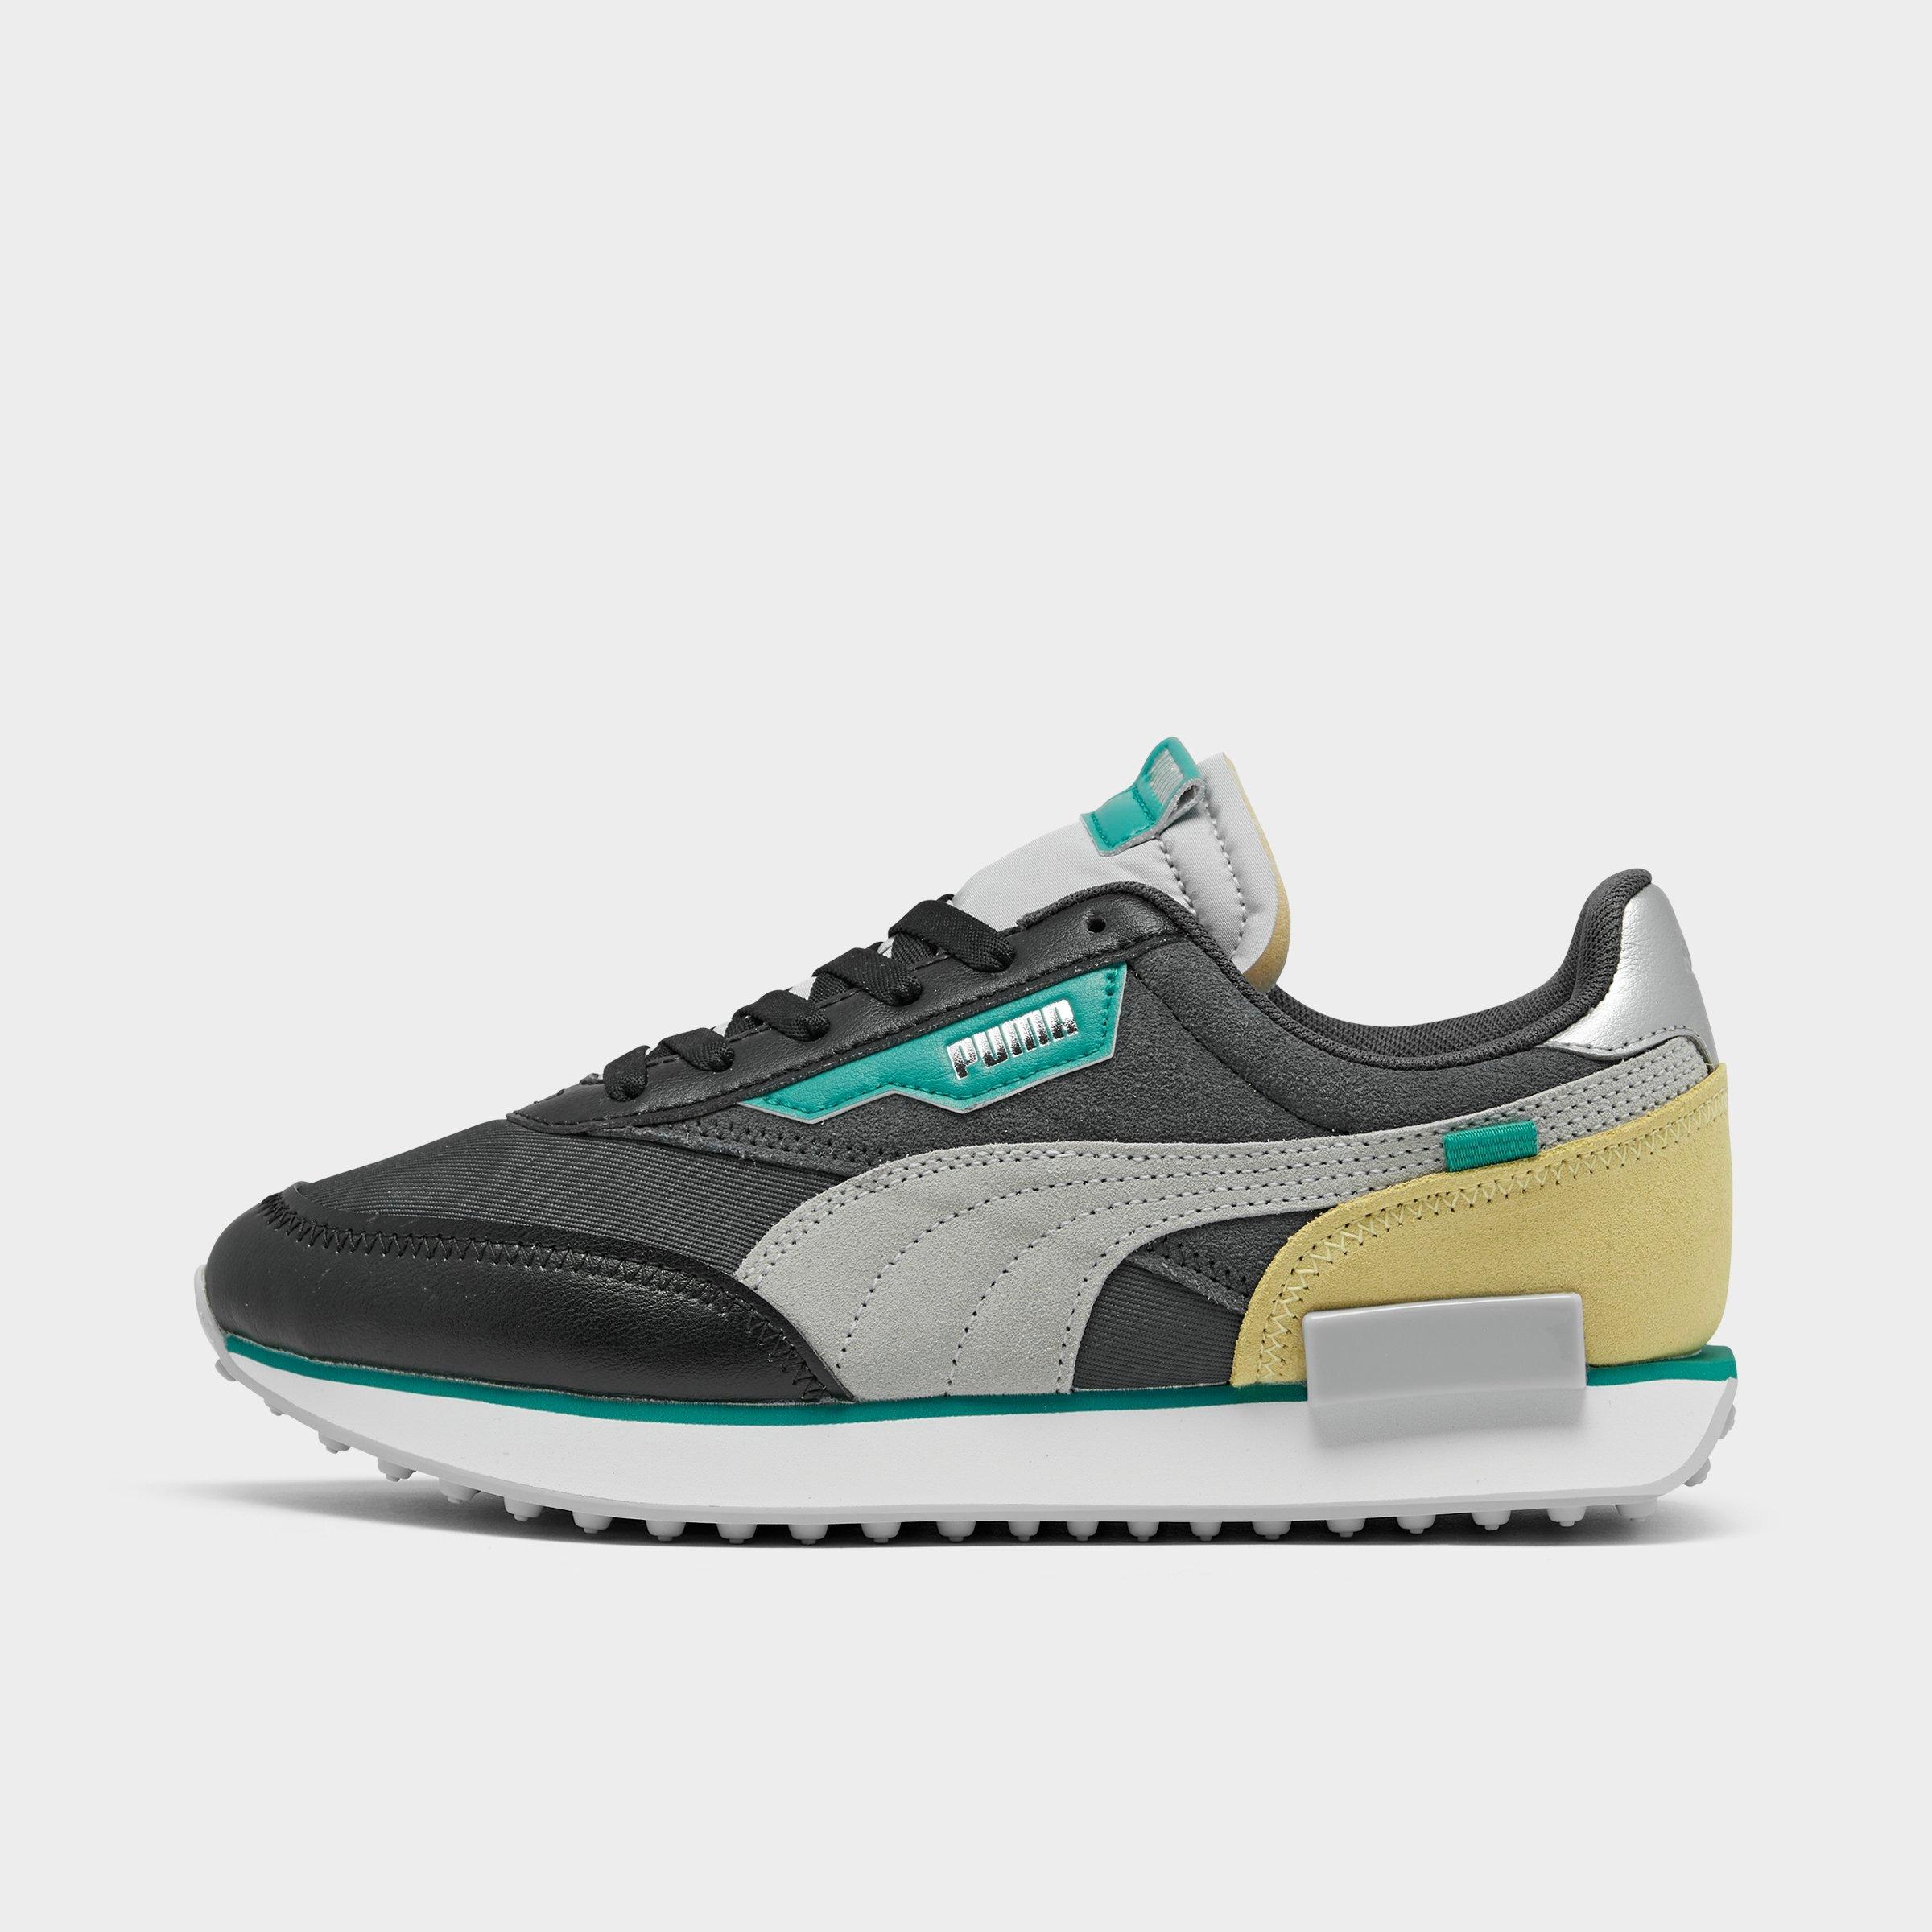 Puma Shoes 2020 | Newest Puma Sneakers 